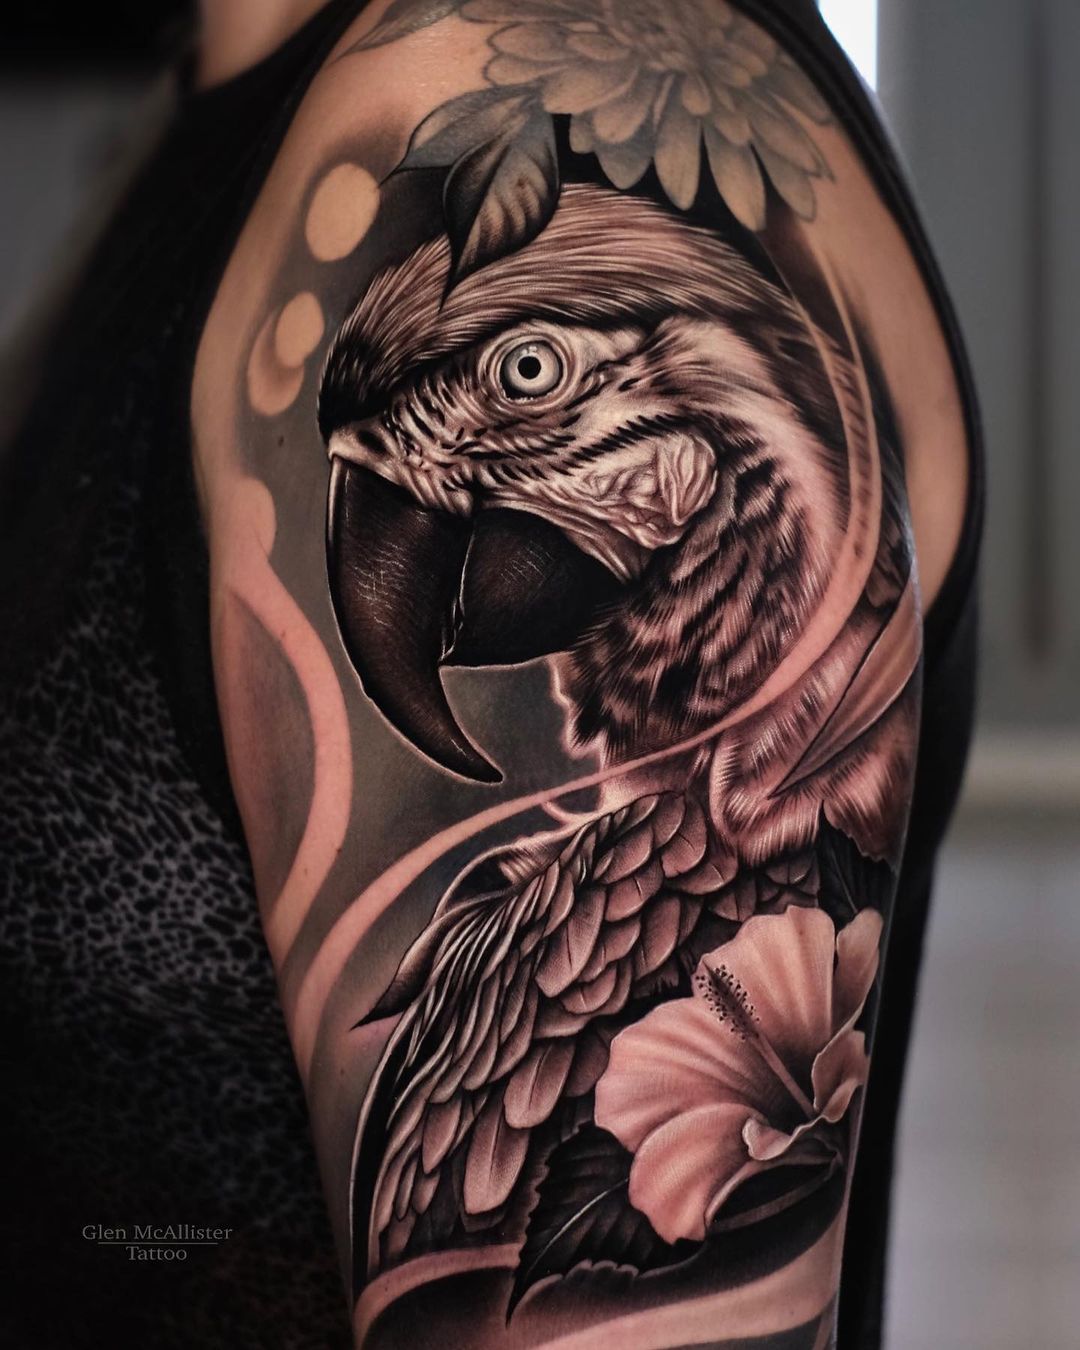 Parrot tattoo ideas for men by glen.tattoo